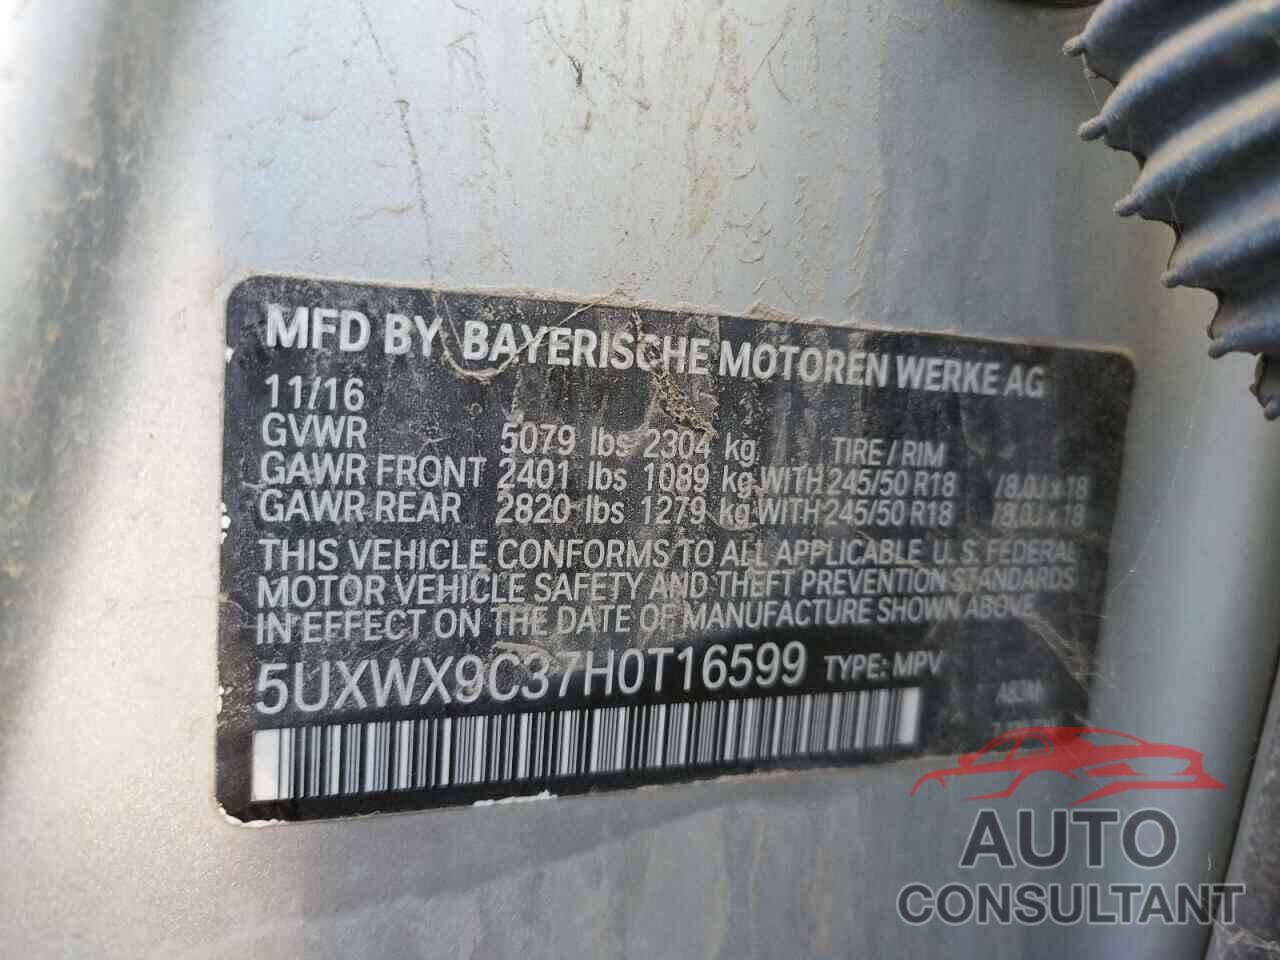 BMW X3 2017 - 5UXWX9C37H0T16599